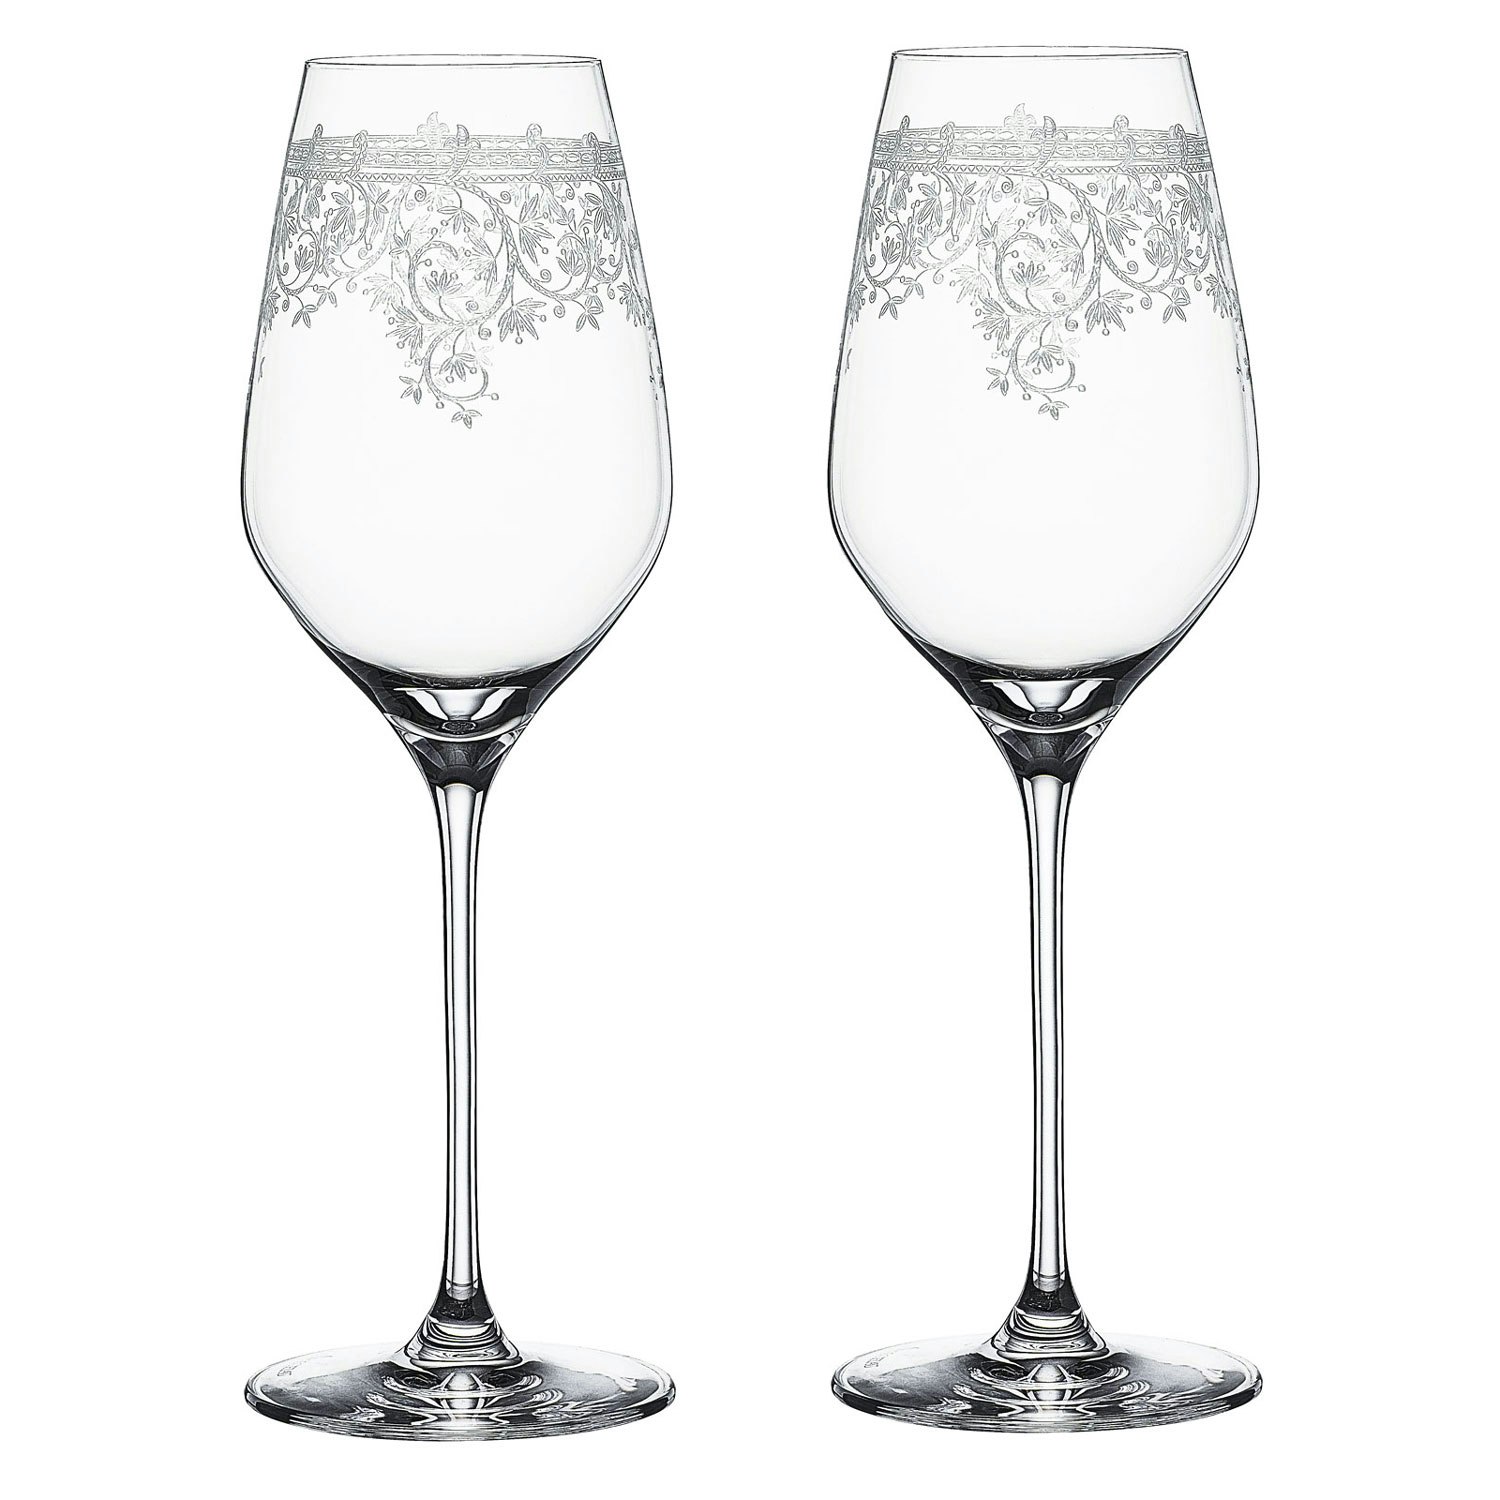 https://royaldesign.com/image/2/spiegelau-arabesque-wine-glass-2-pack-50-cl-0